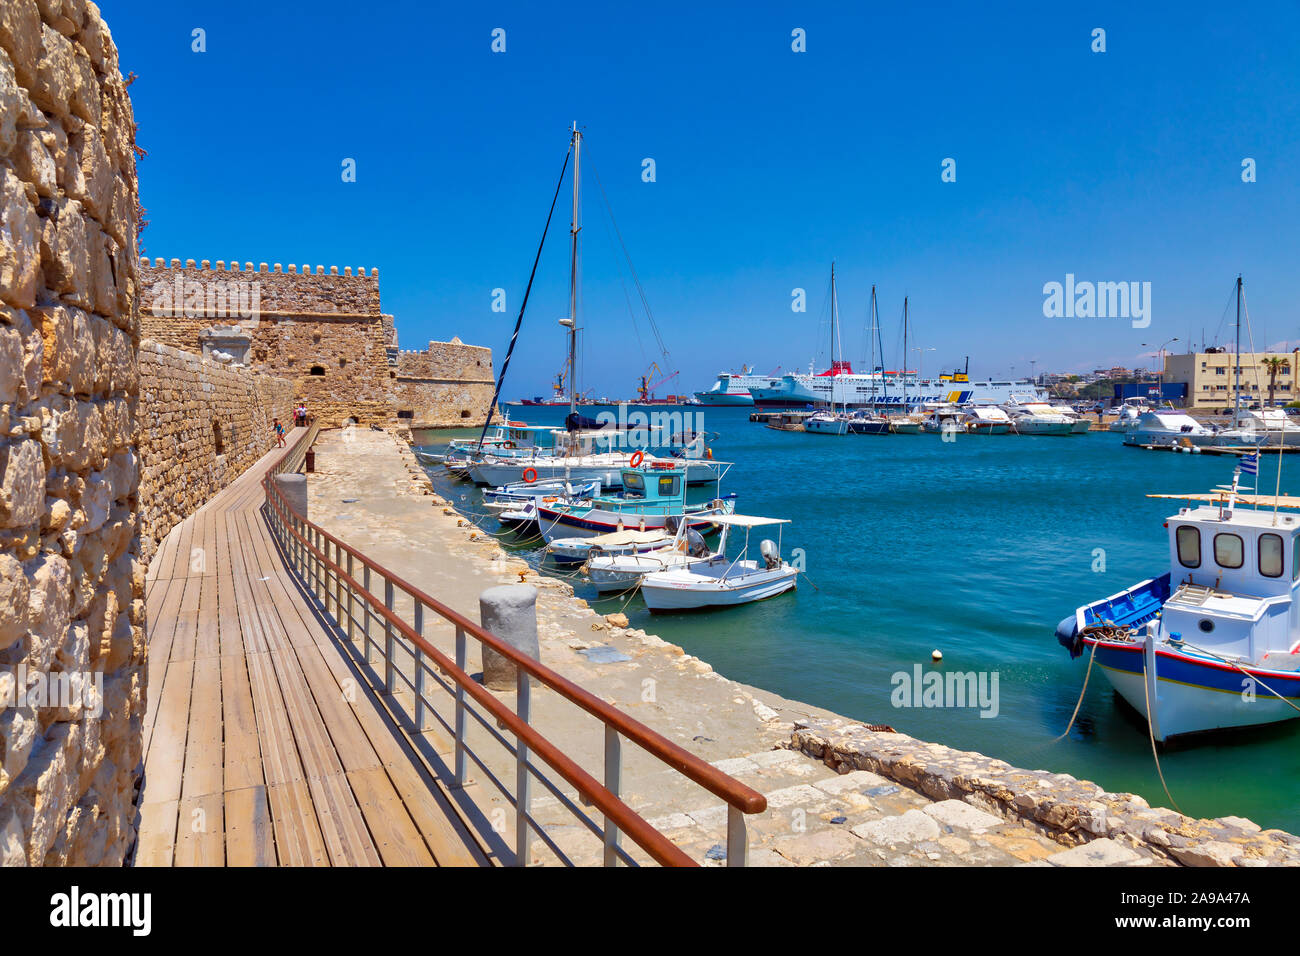 HERAKLION, CRETE ISLAND, GREECE – JUN 22, 2019: View of Venetian Koules Fortress – Castello a Mare and boats in Heraklion harbor. Image Stock Photo